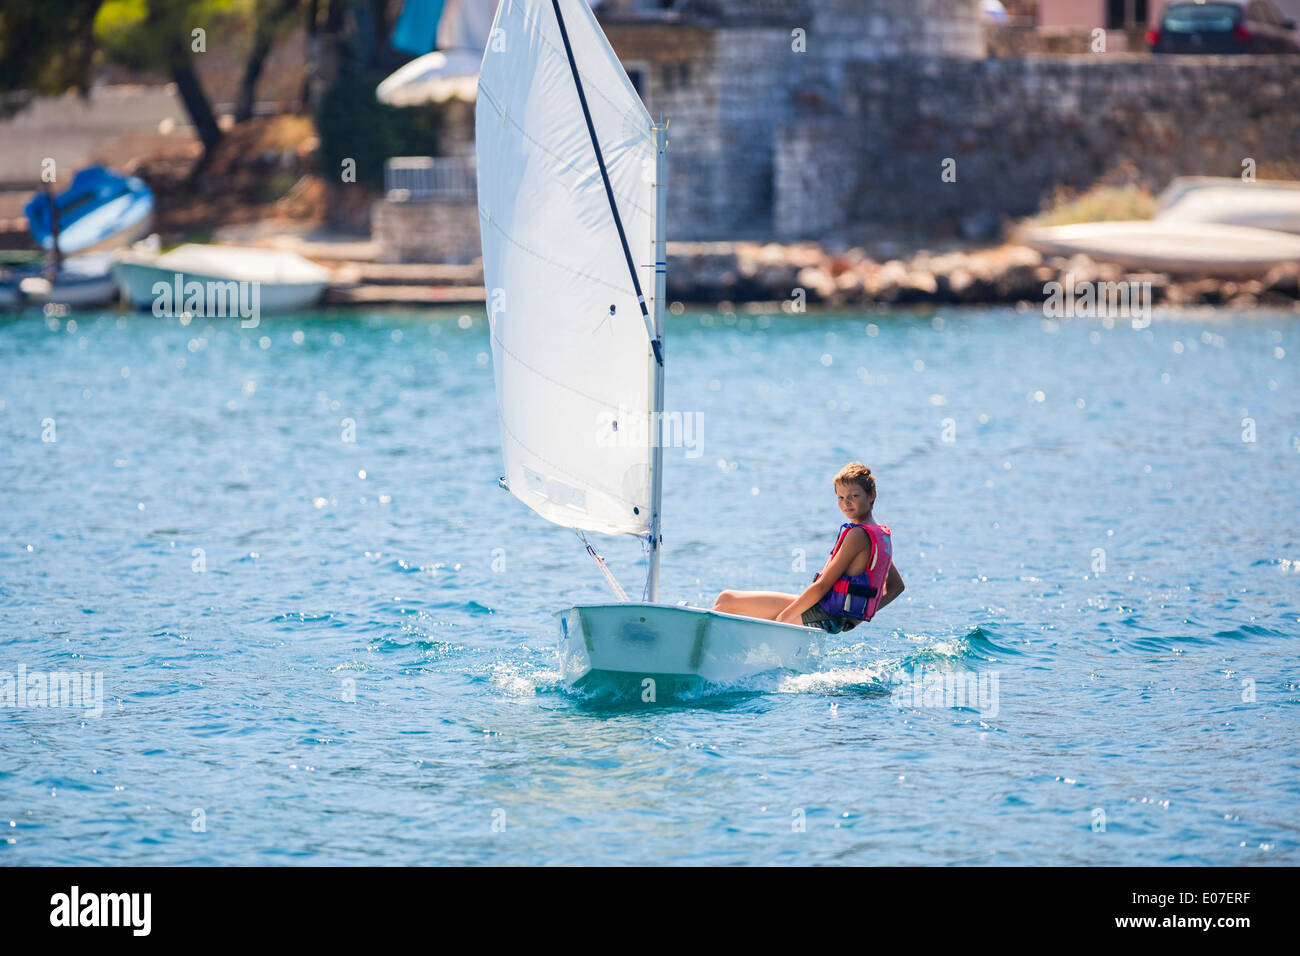 Boy in a sailboat, Hvar island, Croatia Stock Photo